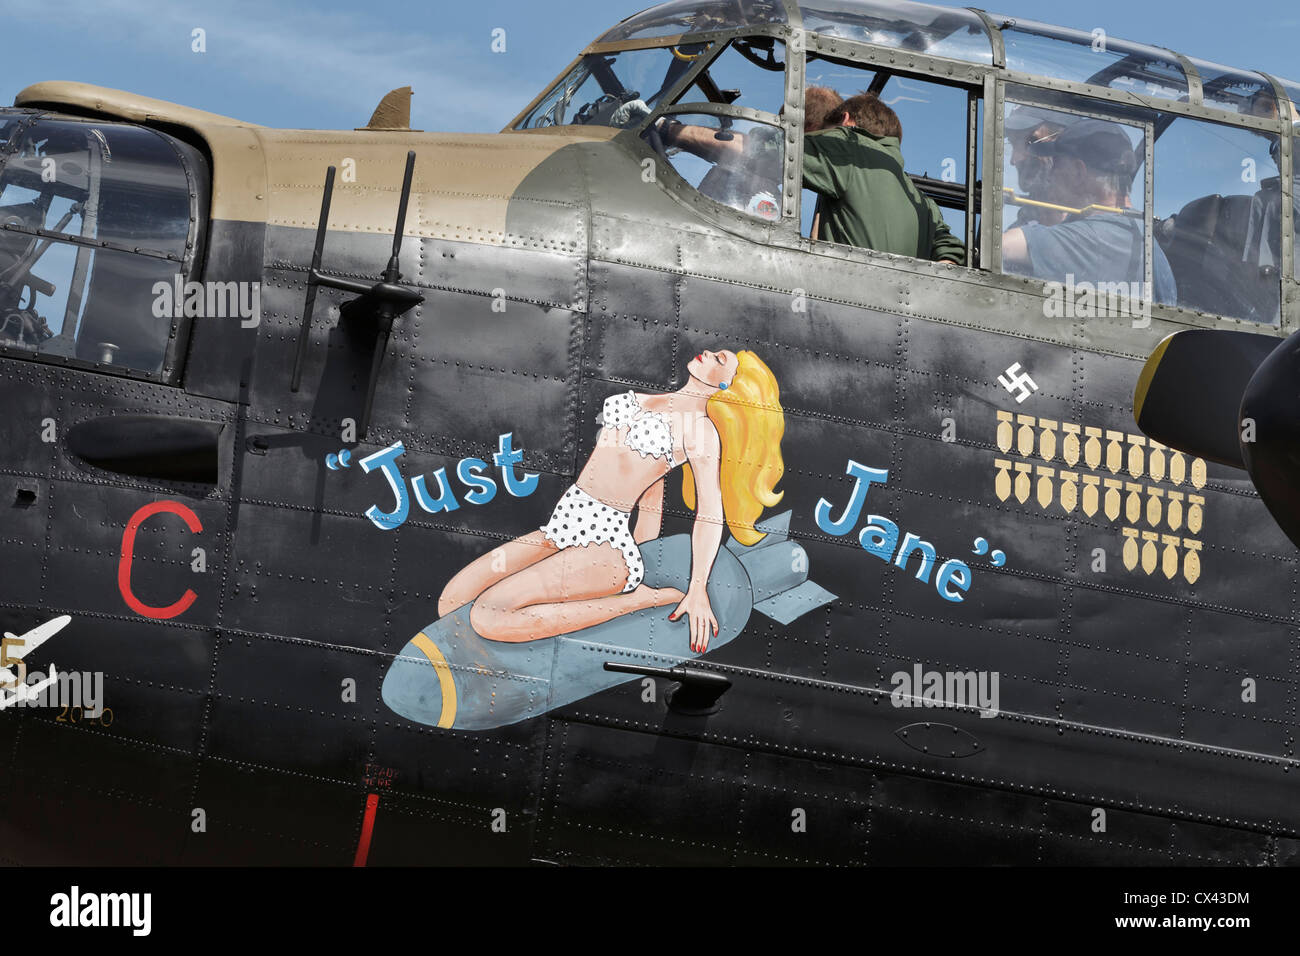 Just Jane nose art on aircraft Avro Lancaster RAF bomber Stock Photo